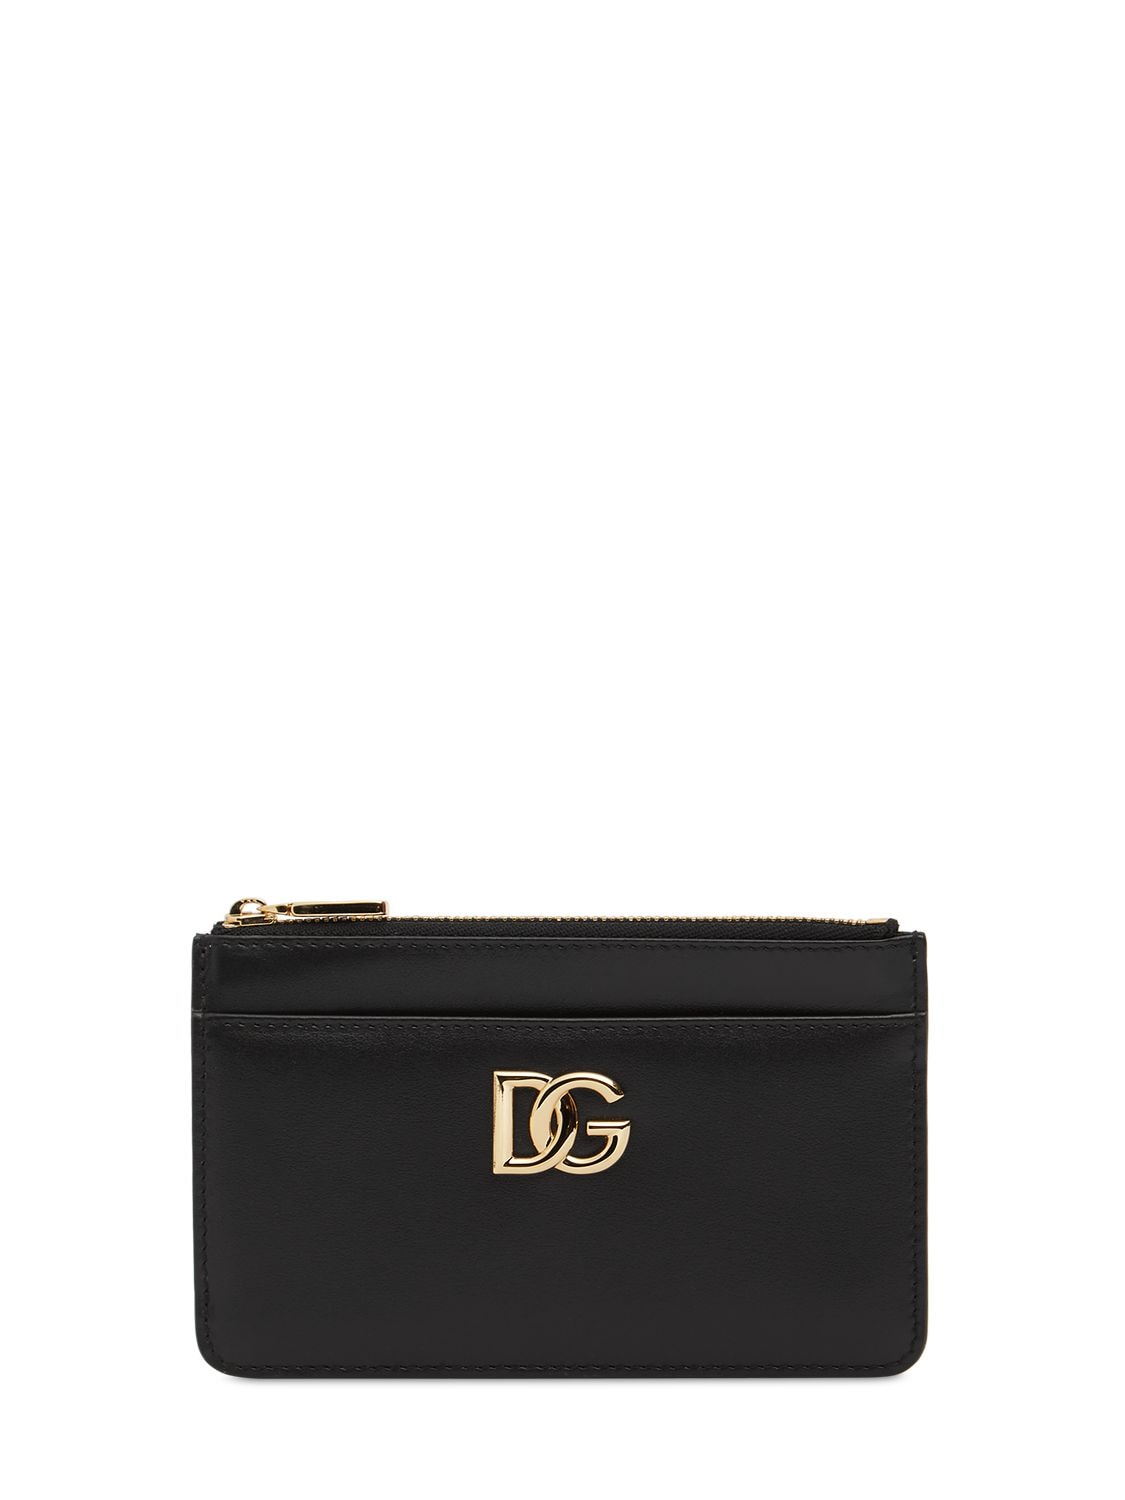 Dolce & Gabbana Dg Smooth Leather Card Holder W/ Zip In Black